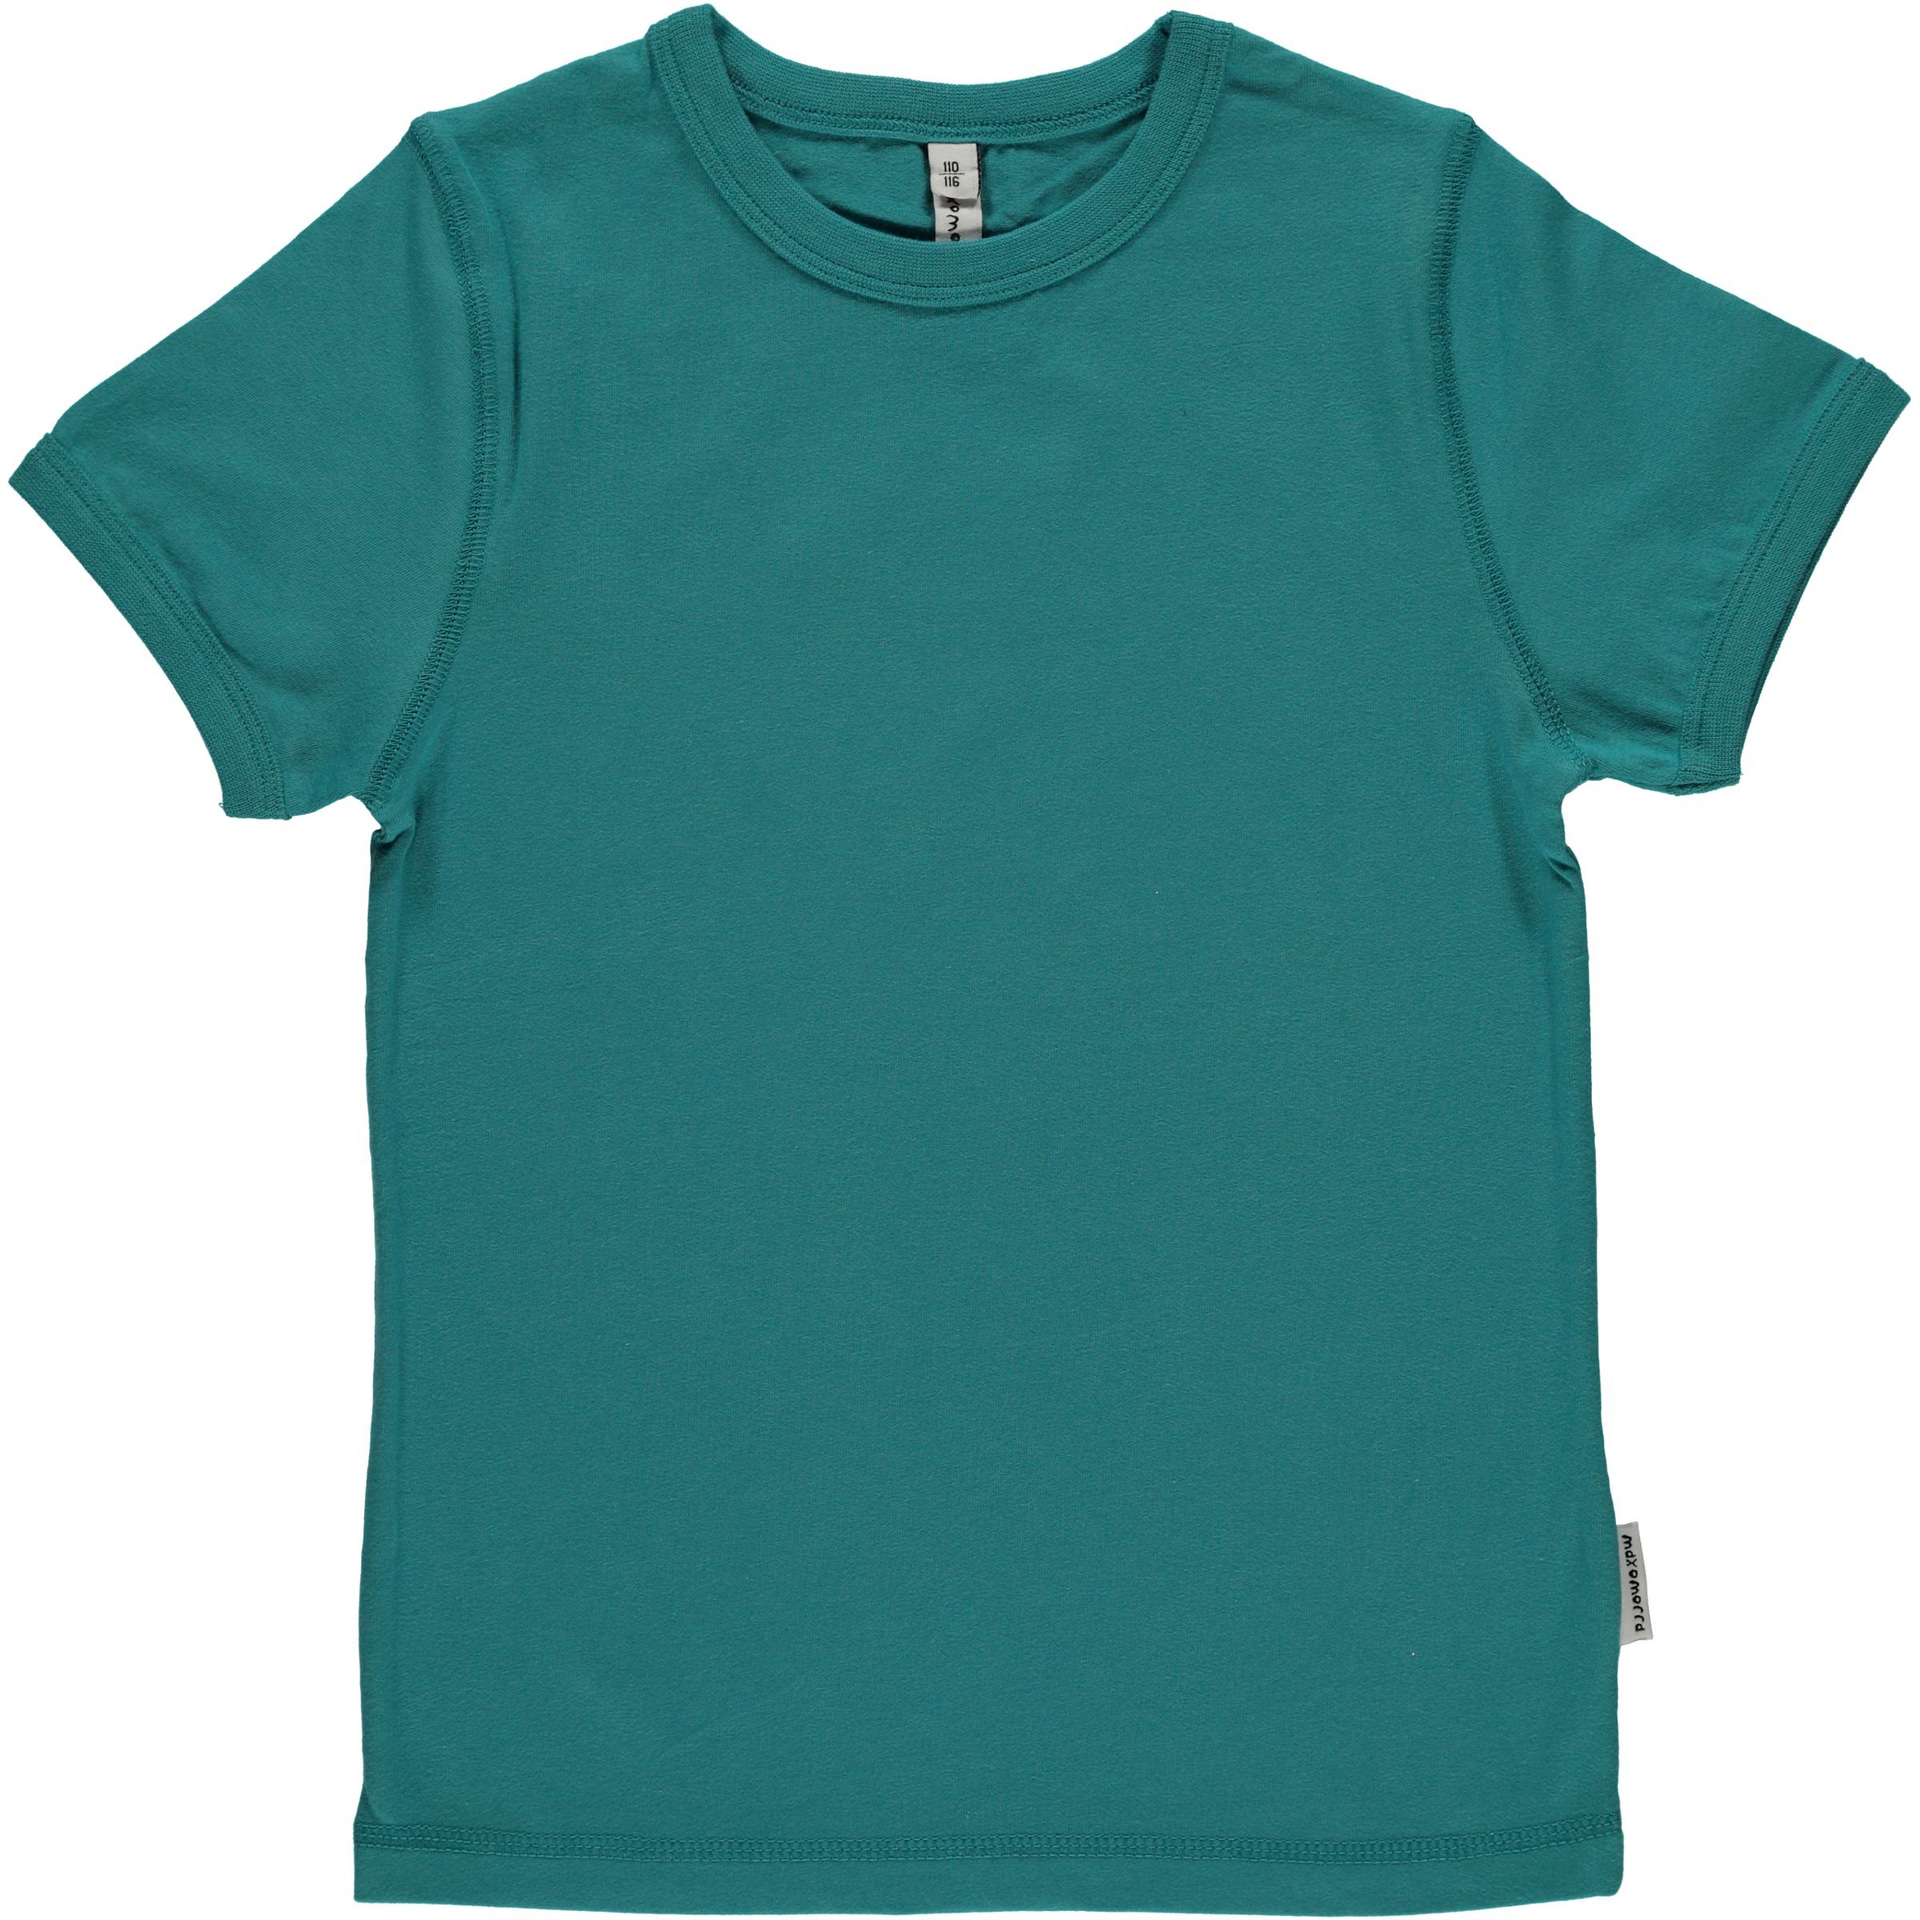 Soft petrol blue solid colour organic short sleeve t-shirt by Maxomorra